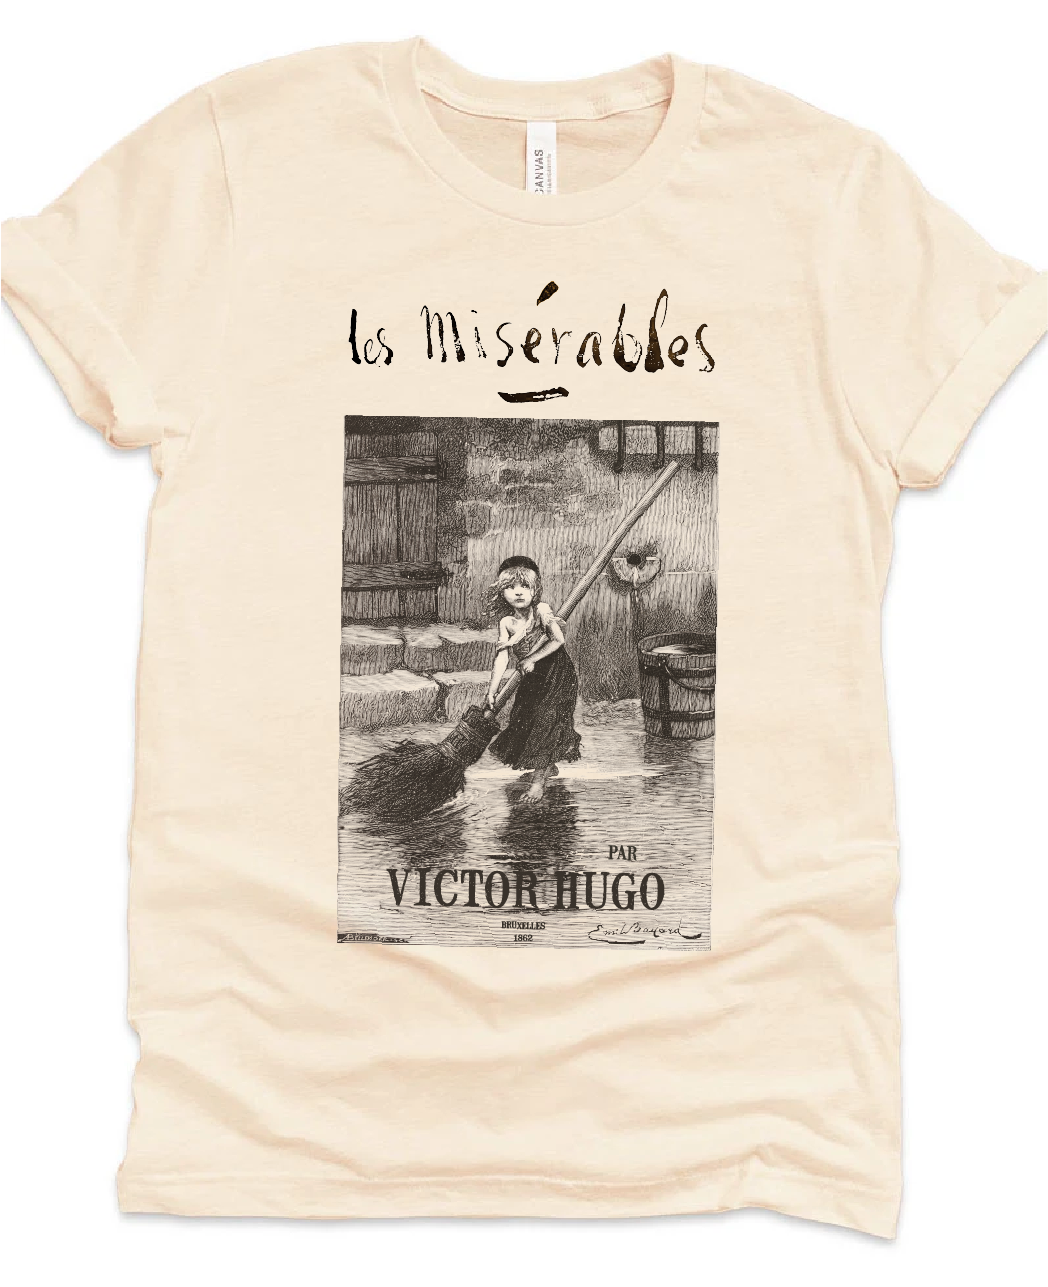 Les Miserables by Ventor Hugo Shirt